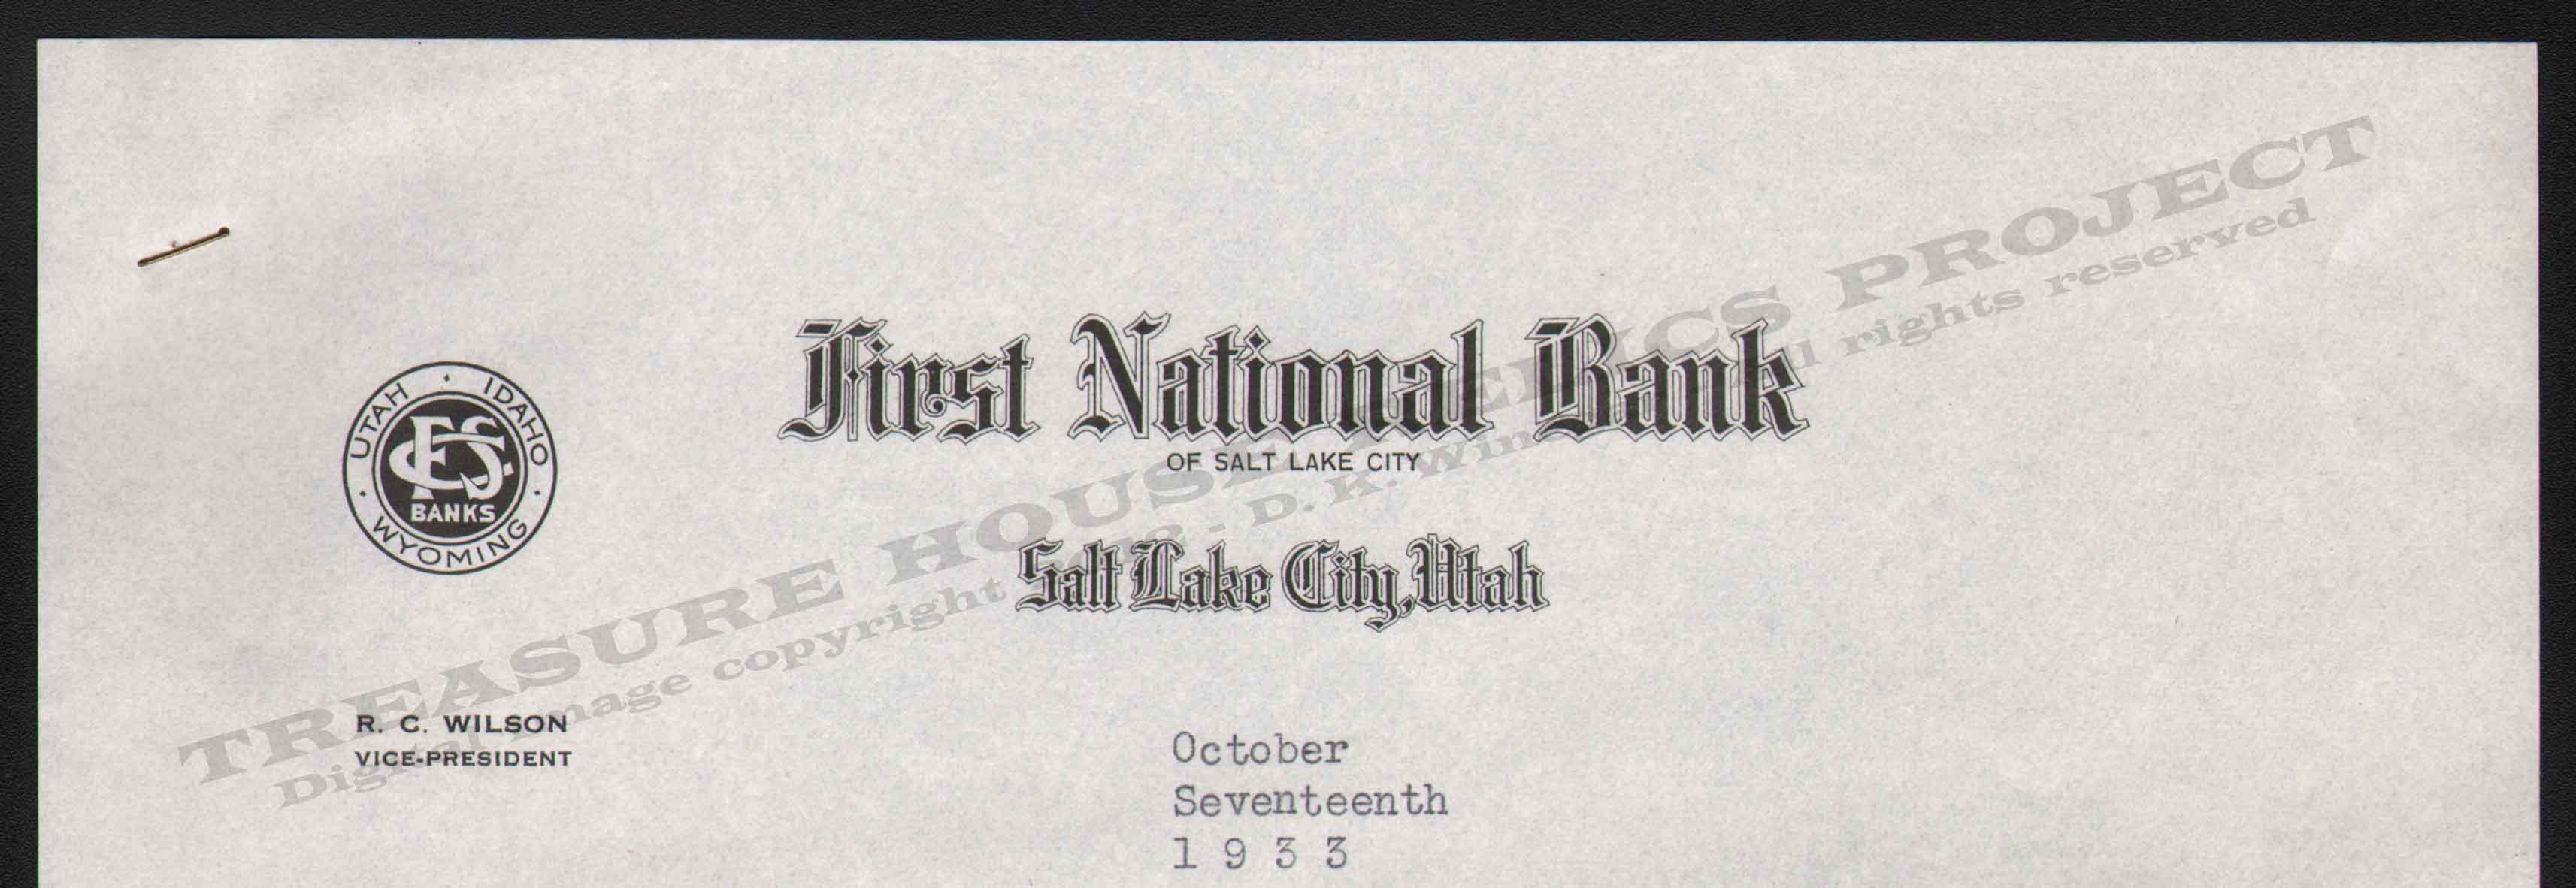 LETTERHEAD/LETTERHEAD_FIRST_NATIONAL_BANK_OF_SALT_LAKE_CITY_1933_BAM_400_CROP_EMBOSS.jpg